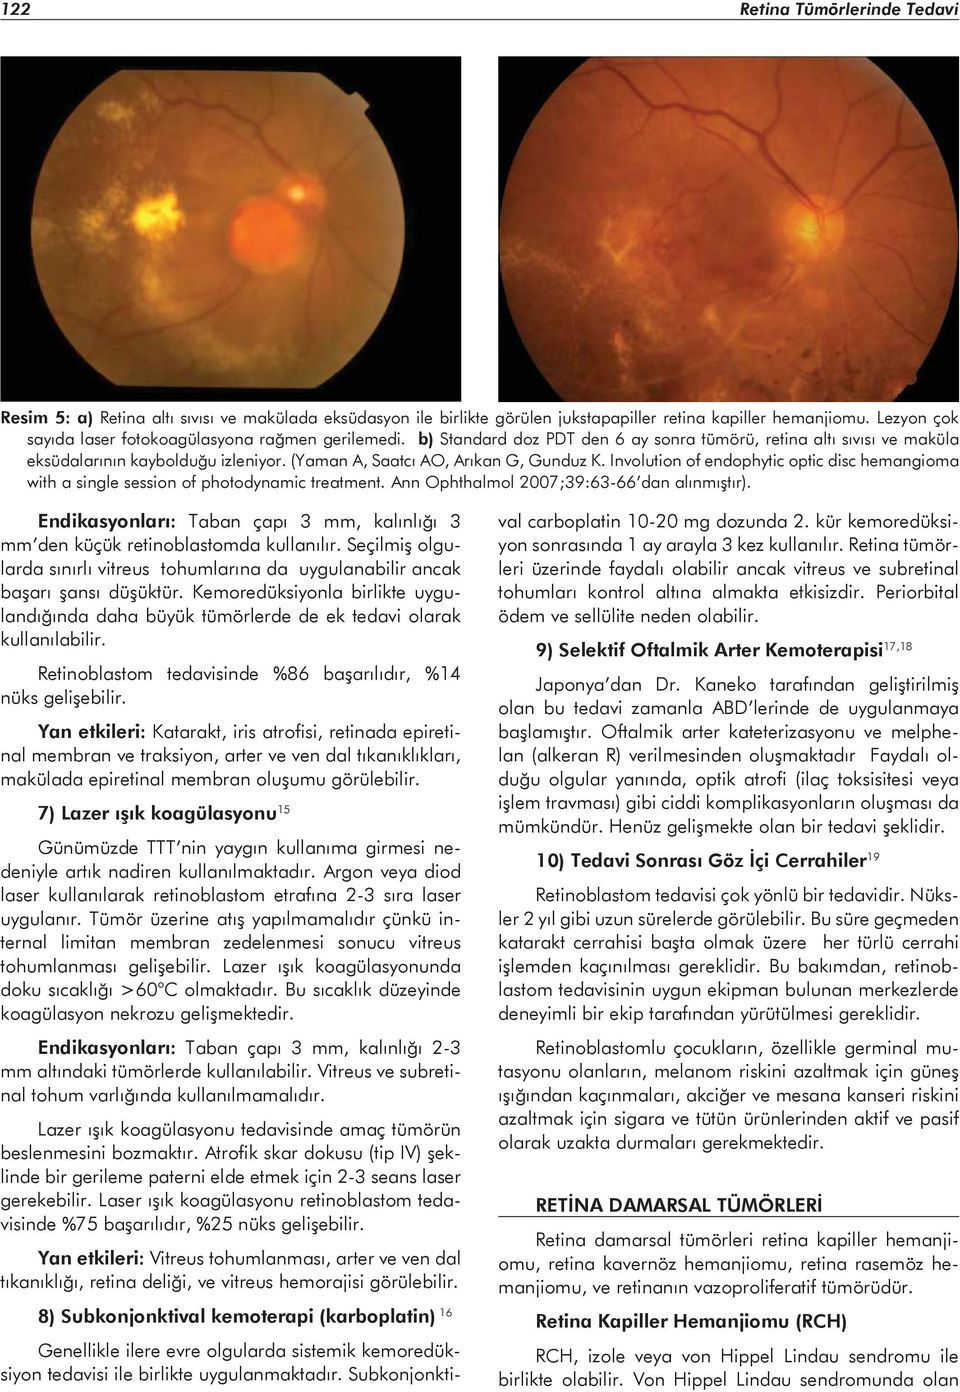 (Yaman A, Saatcı AO, Arıkan G, Gunduz K. Involution of endophytic optic disc hemangioma with a single session of photodynamic treatment. Ann Ophthalmol 2007;39:63-66 dan alınmıştır).